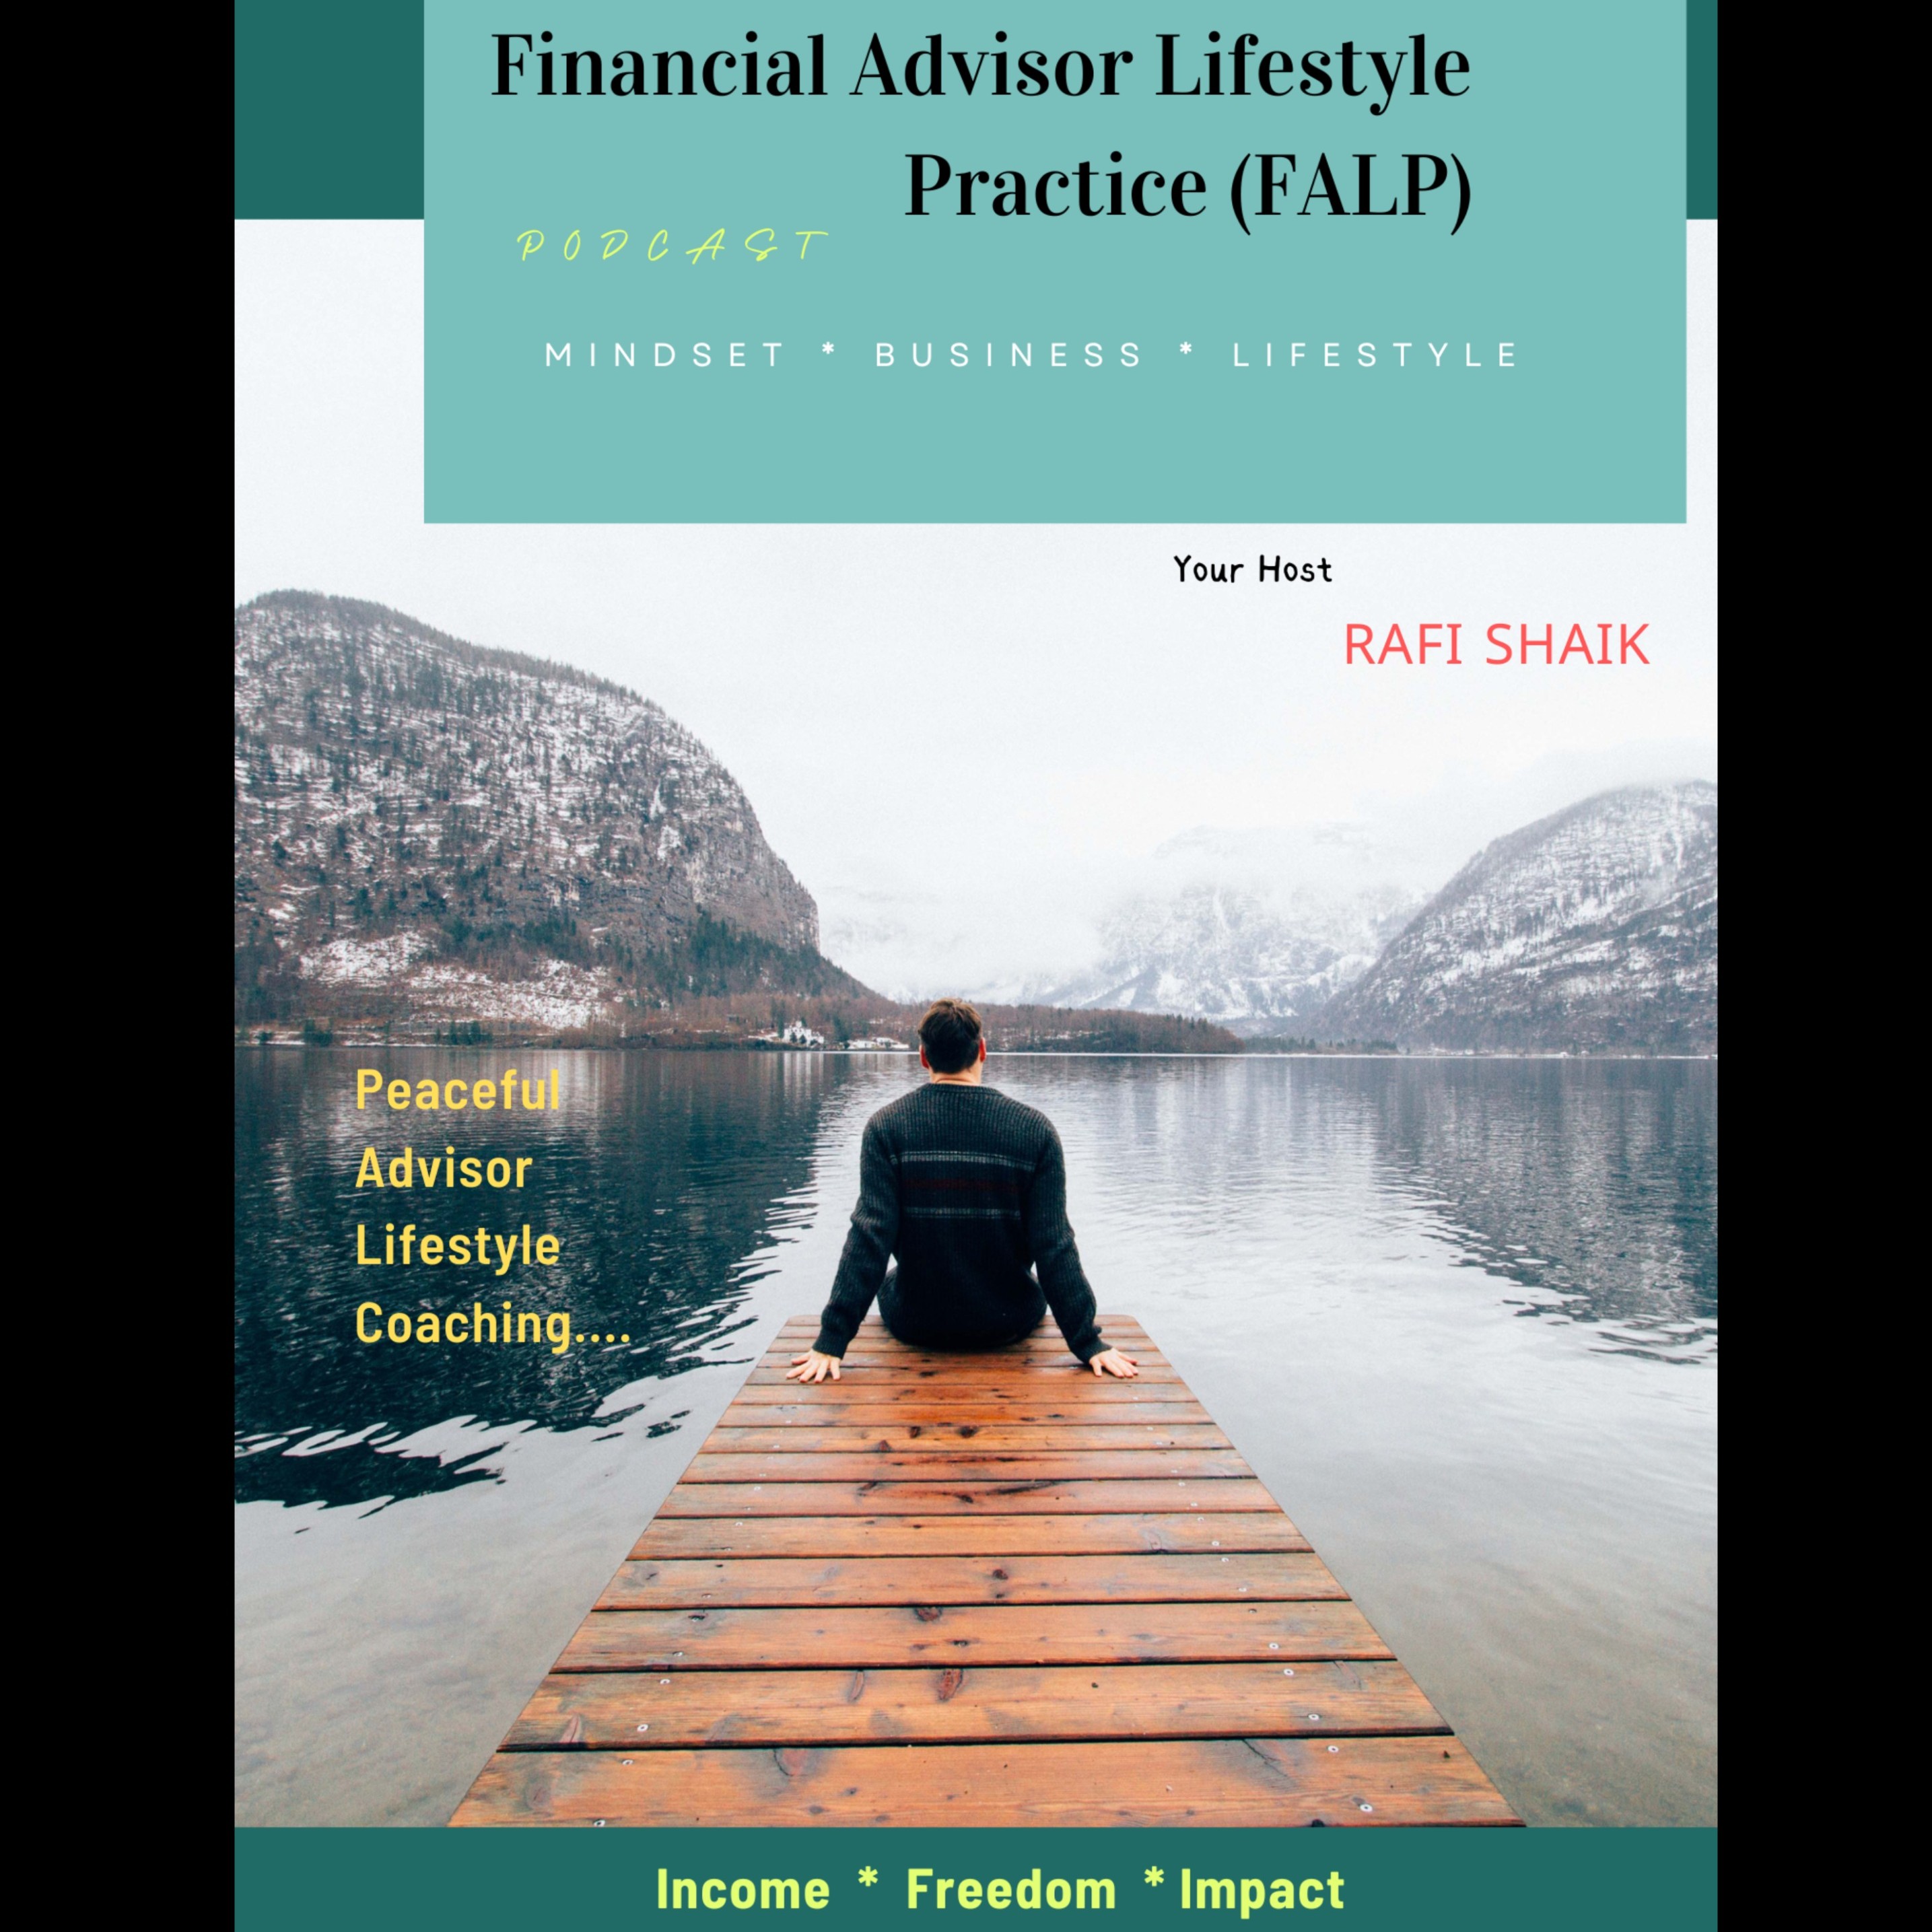 Financial Advisor Lifestyle Practice